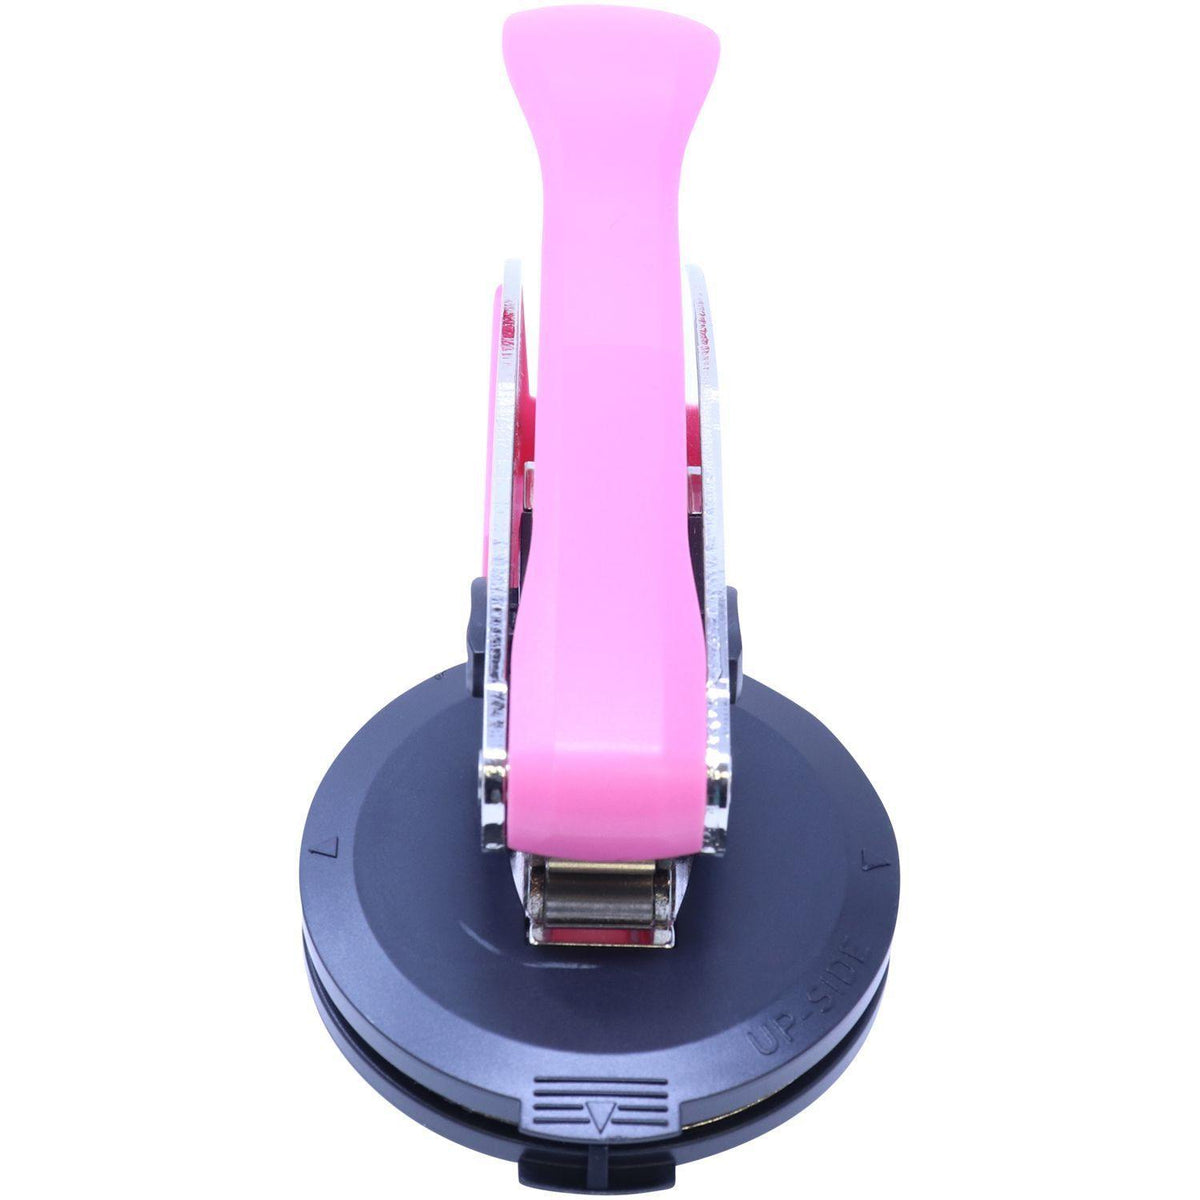 Real Estate Appraiser Pink Hybrid Handheld Embosser - Engineer Seal Stamps - Embosser Type_Handheld, Embosser Type_Hybrid, Type of Use_Professional